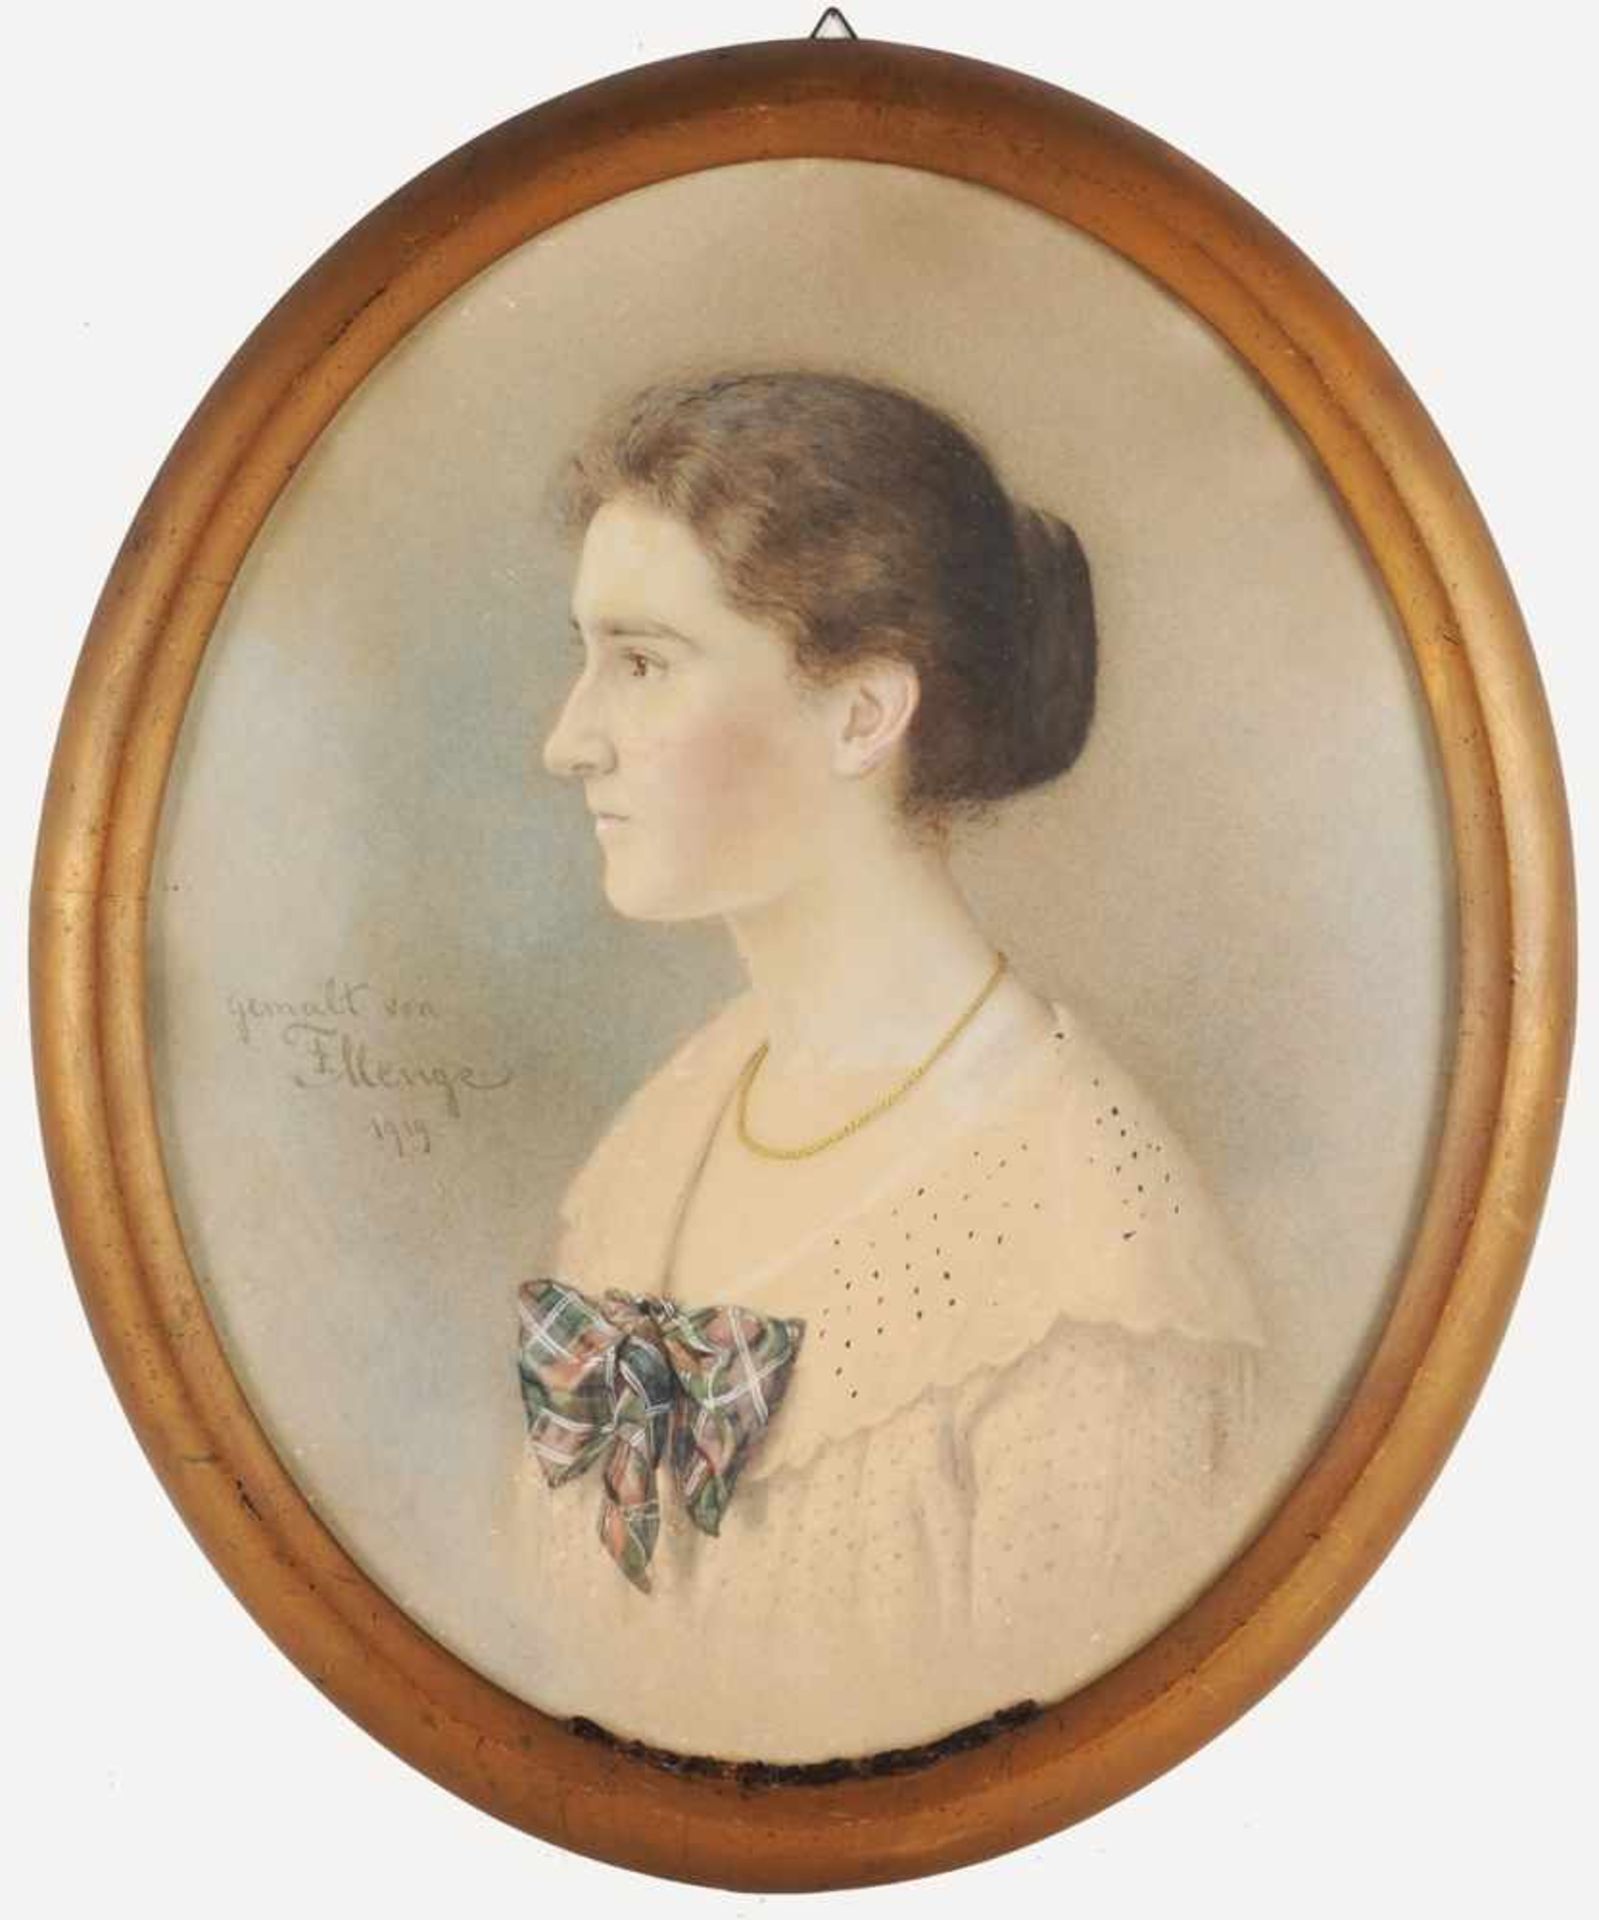 Menge, Ferdinand Blei, Aquarell/Papier. Ovale Form. Porträt einer jungen Frau. Brustbild, Profilbild